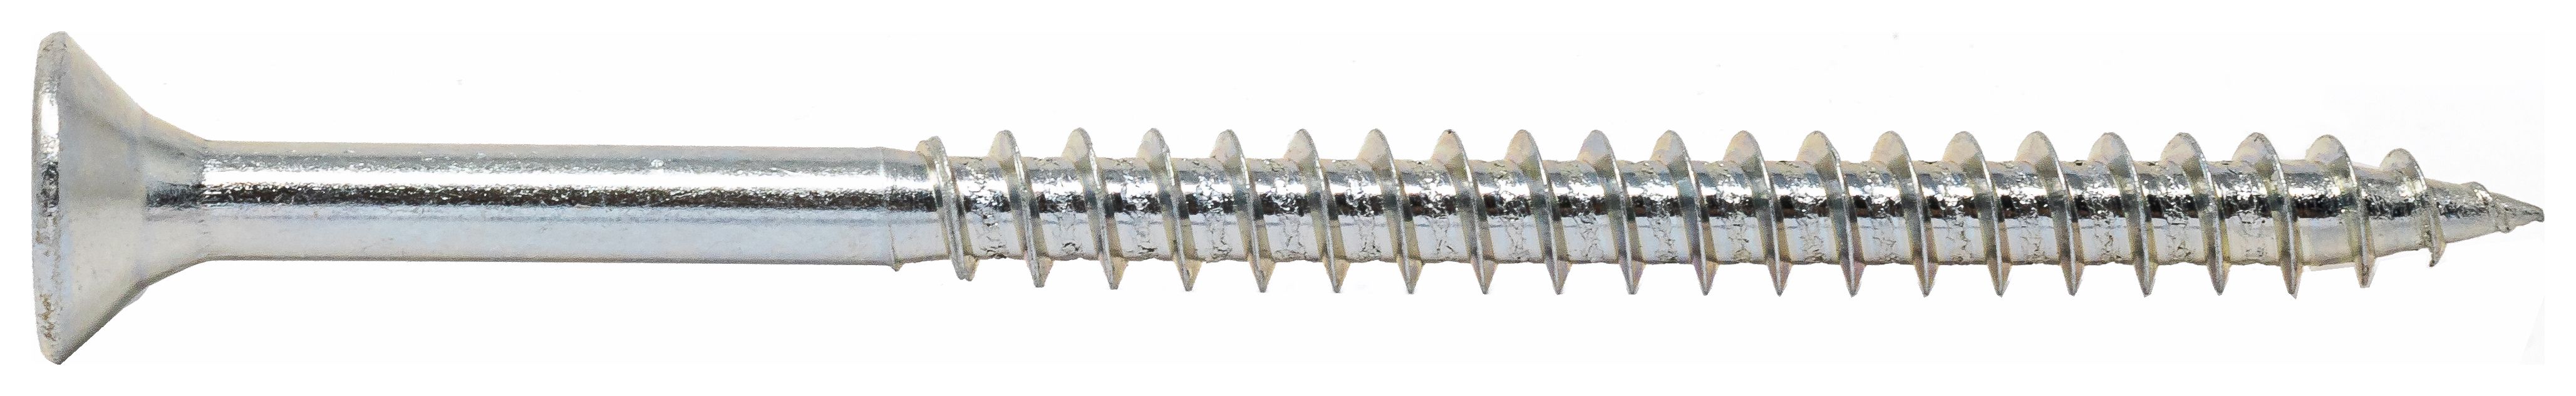 Wickes Single Thread Zinc Plated Screw - 4 X 45mm Pack Of 200